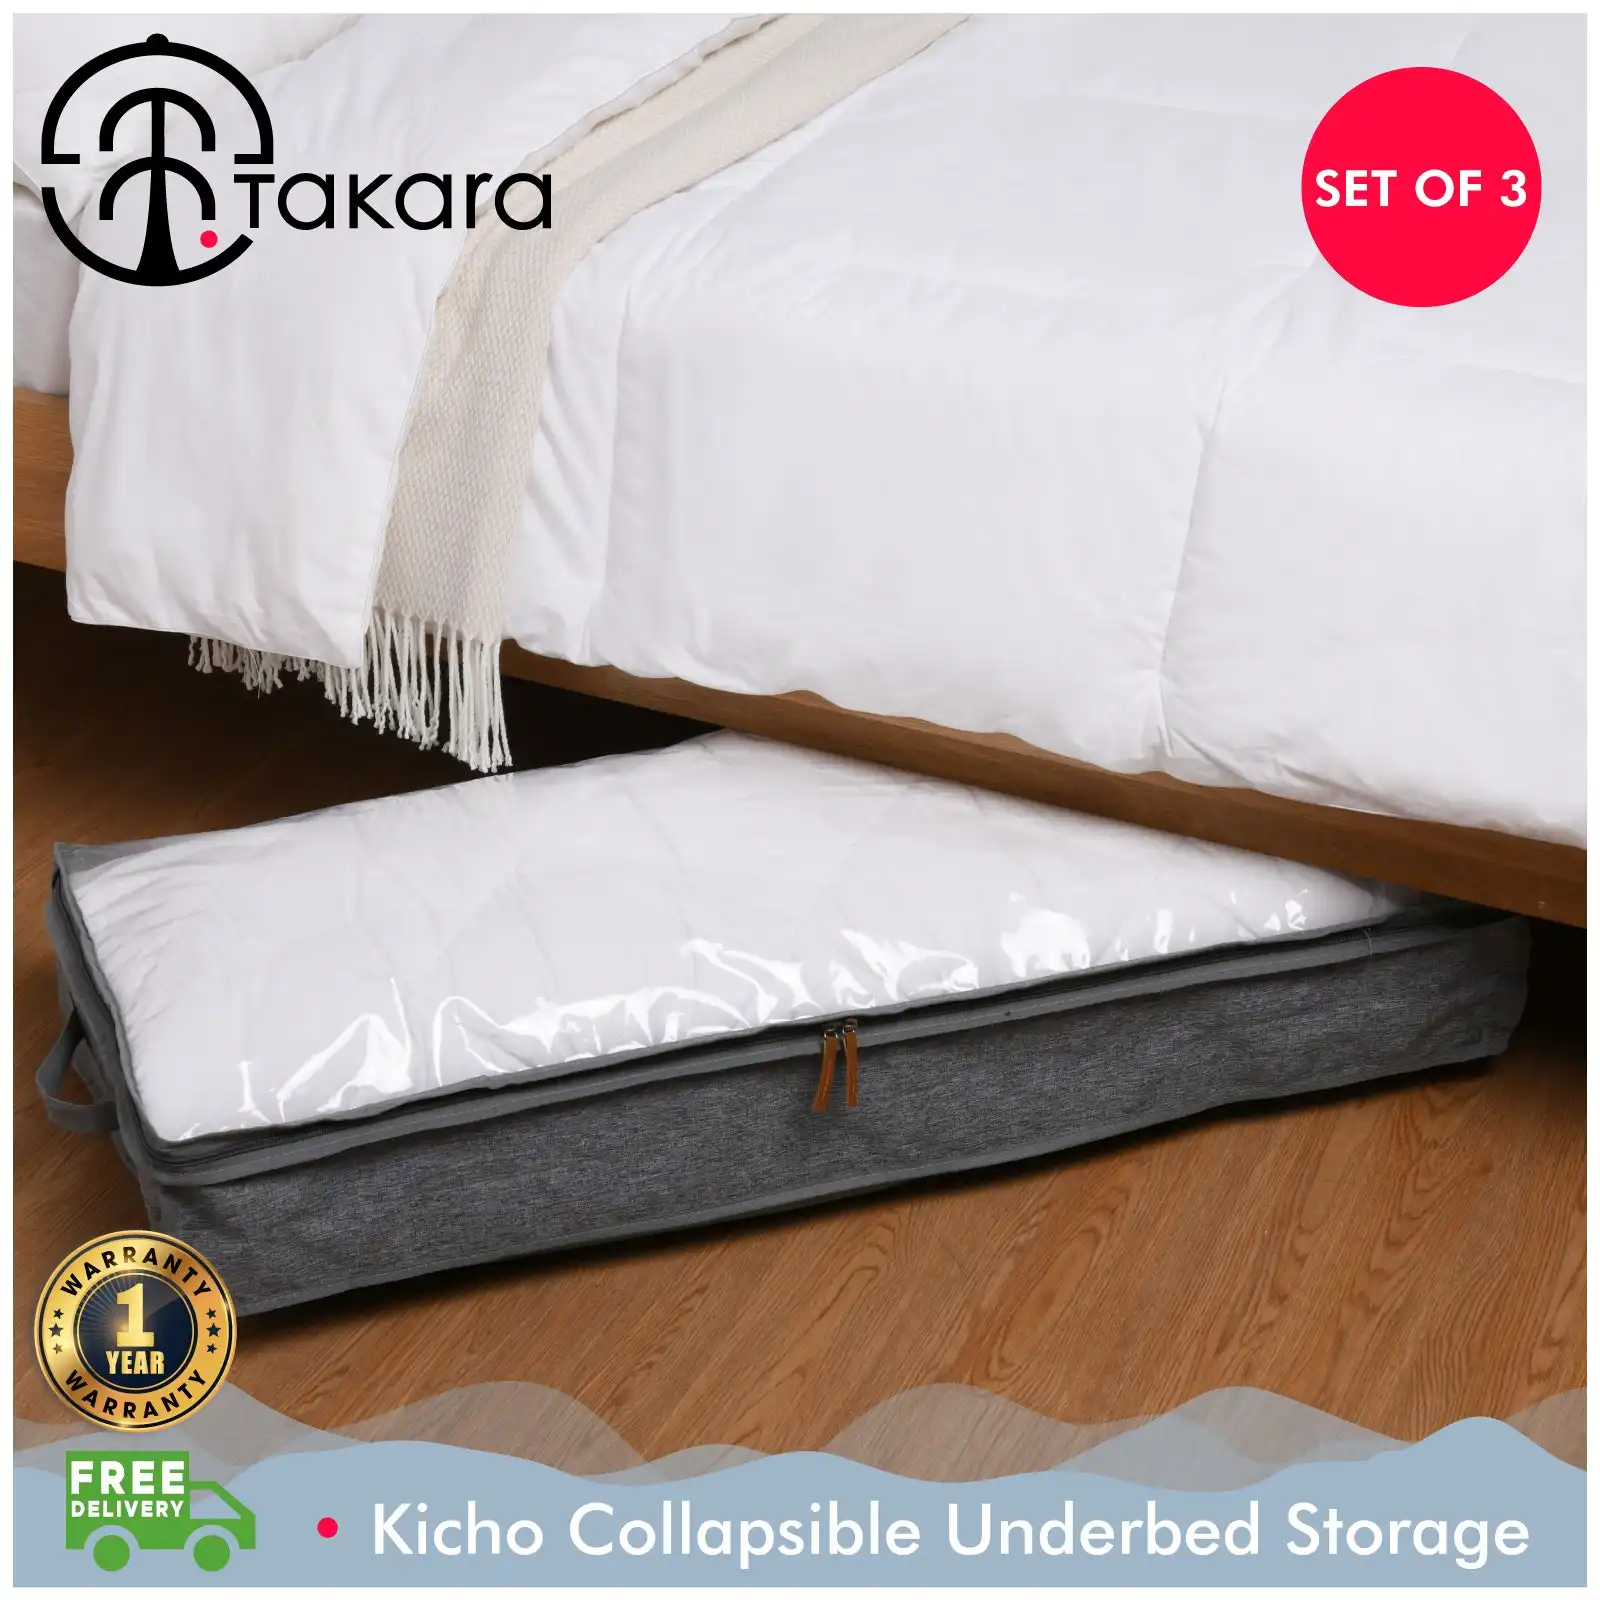 Takara Kicho Fabric Collapsible Underbed Storage Case Grey Set of 3